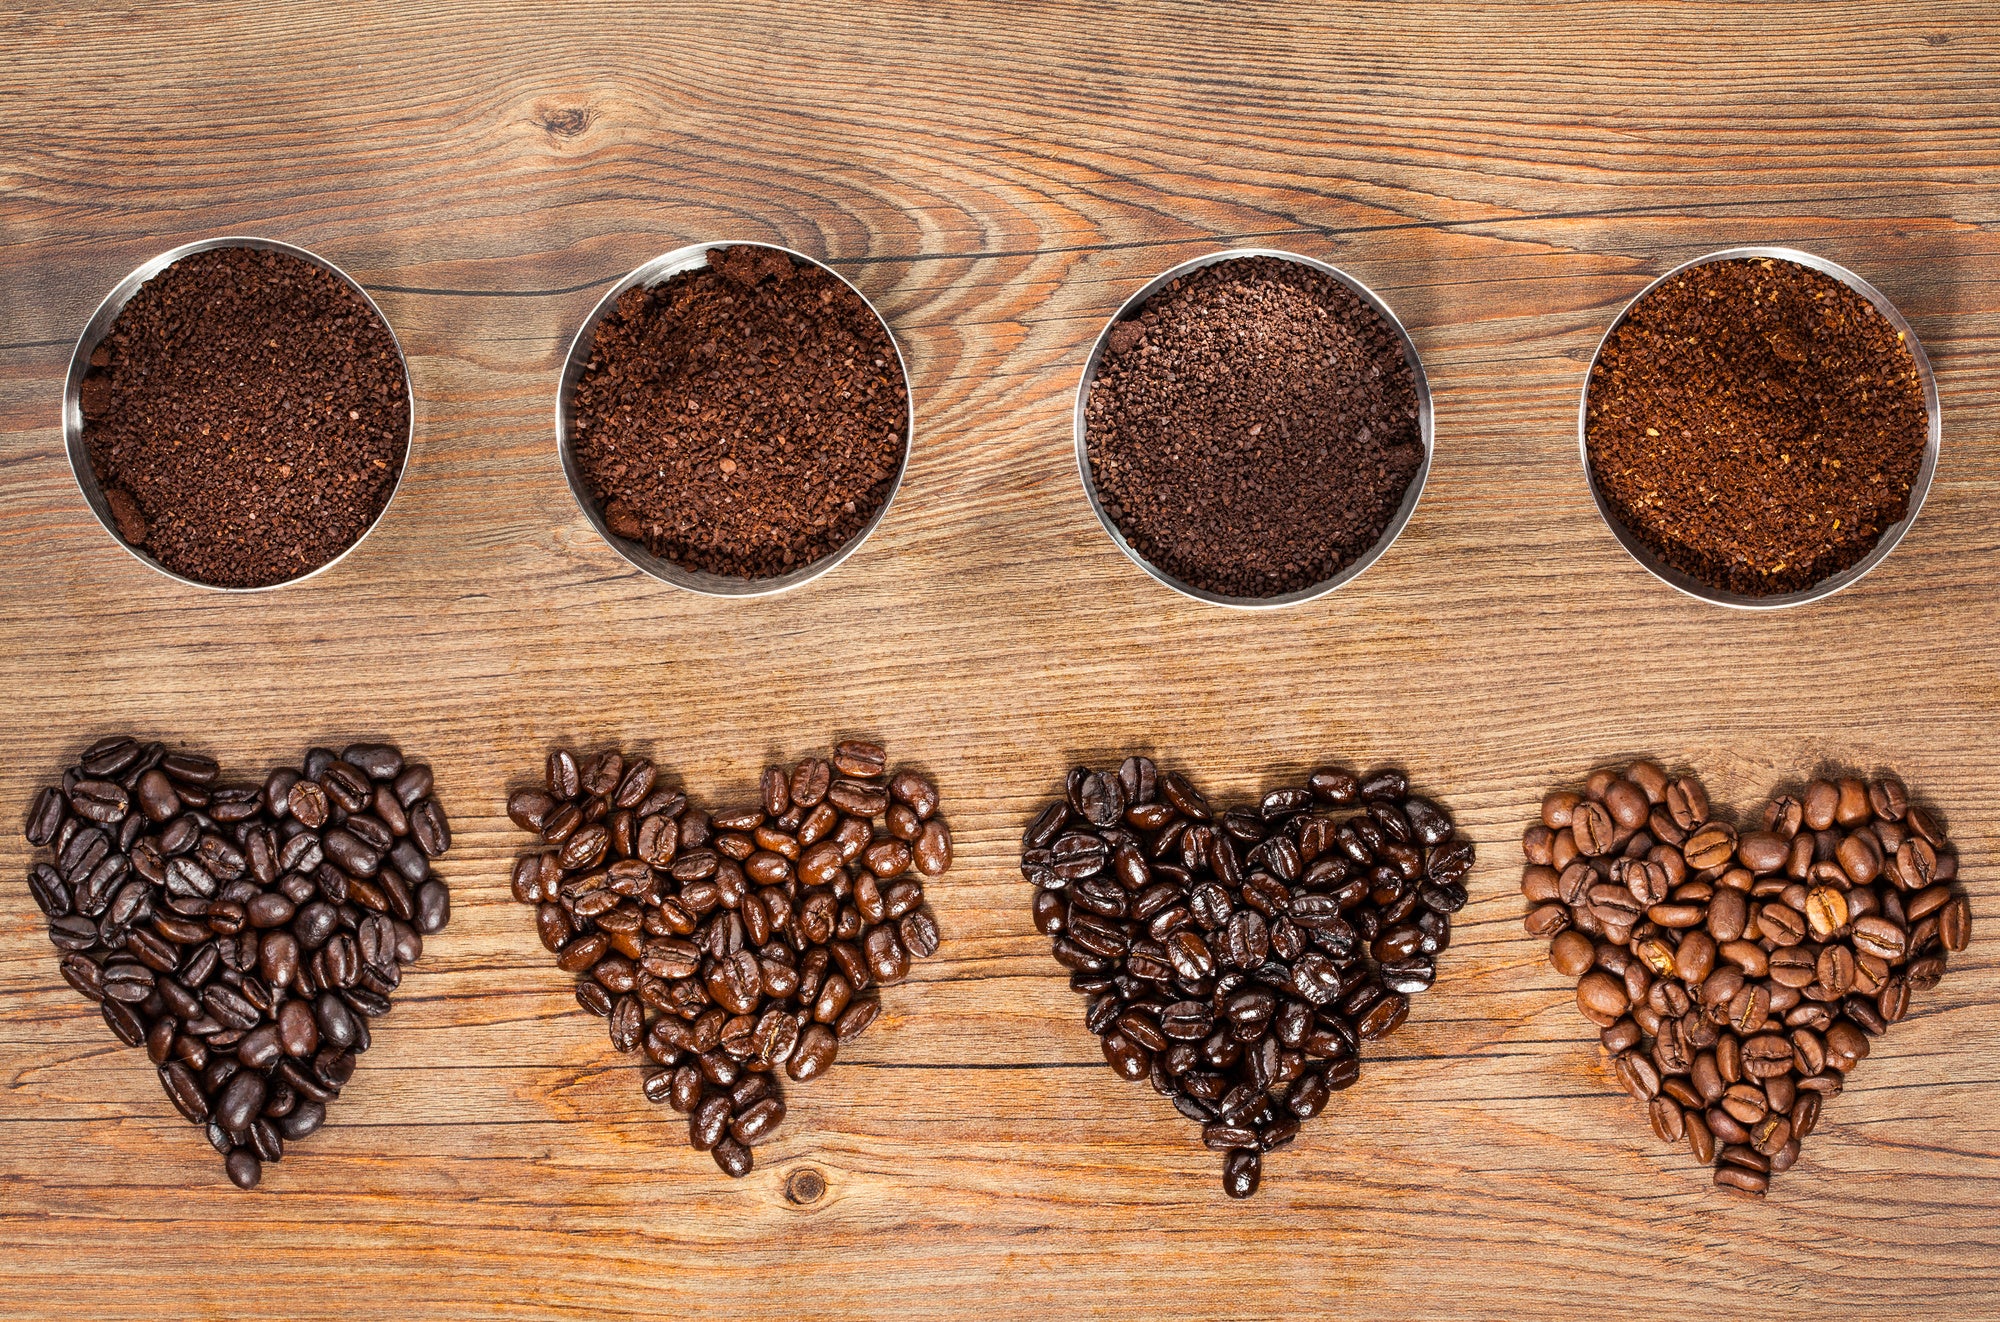 Black Label Dark Roast (Whole Bean) Coffee, The World's Strongest